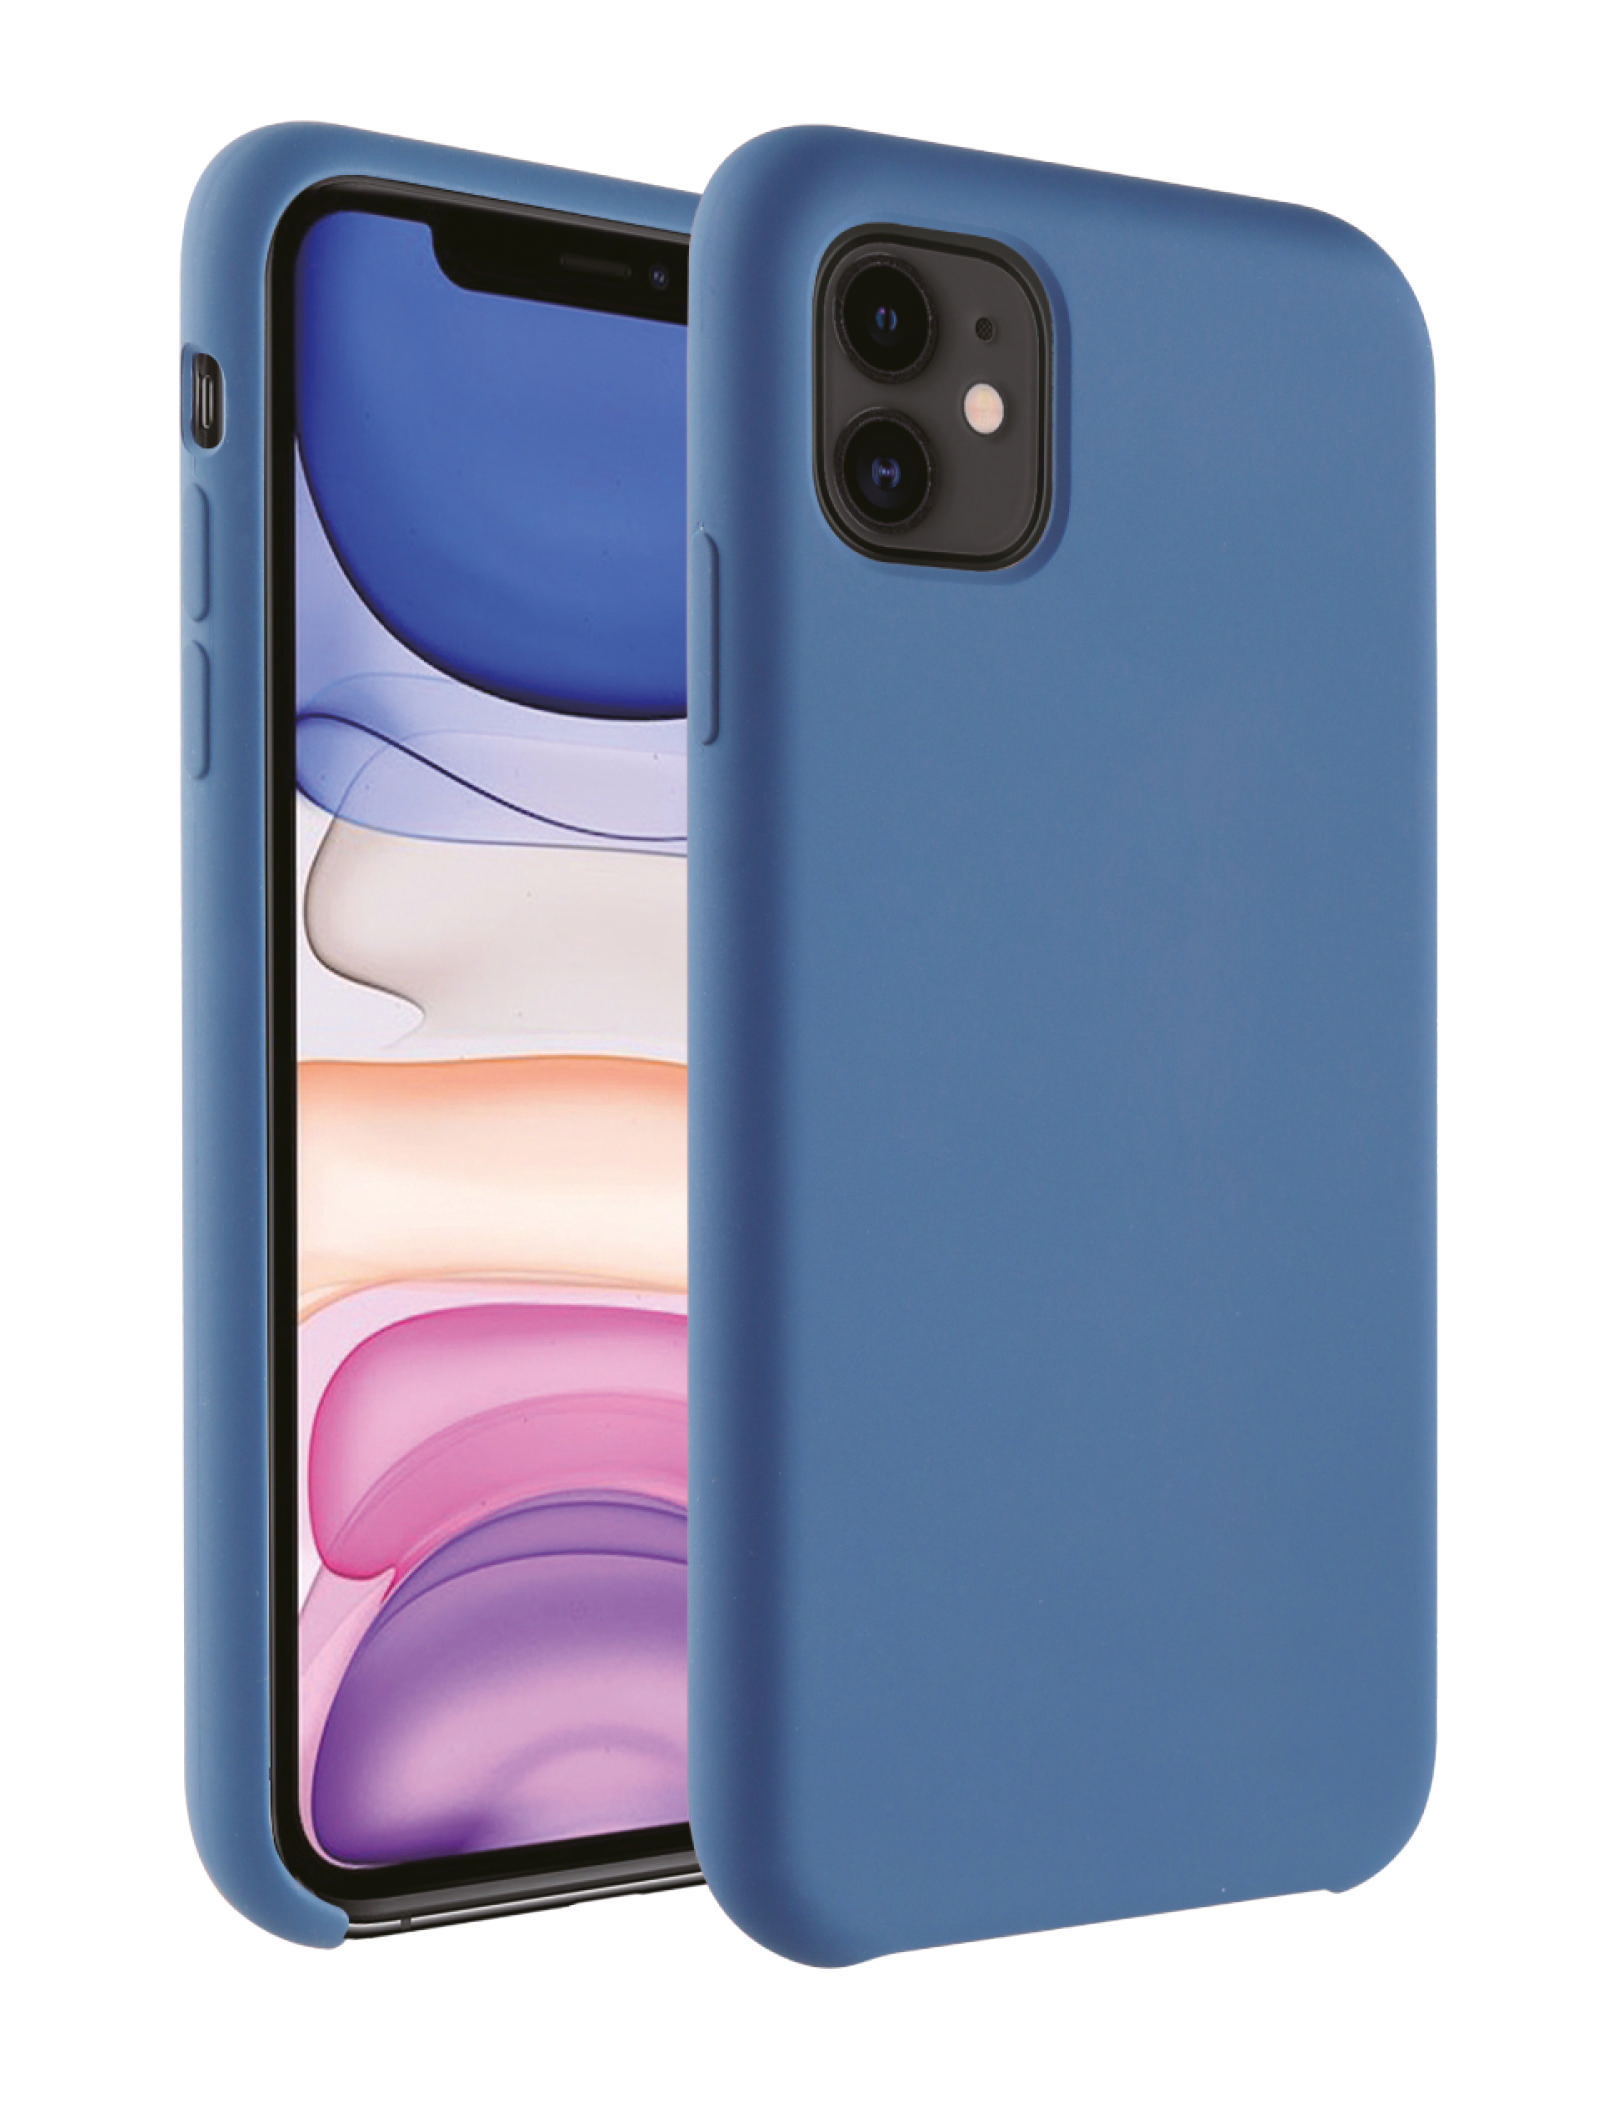 iPhone Blau Backcover, VIVANCO , 61762 Apple, 11,